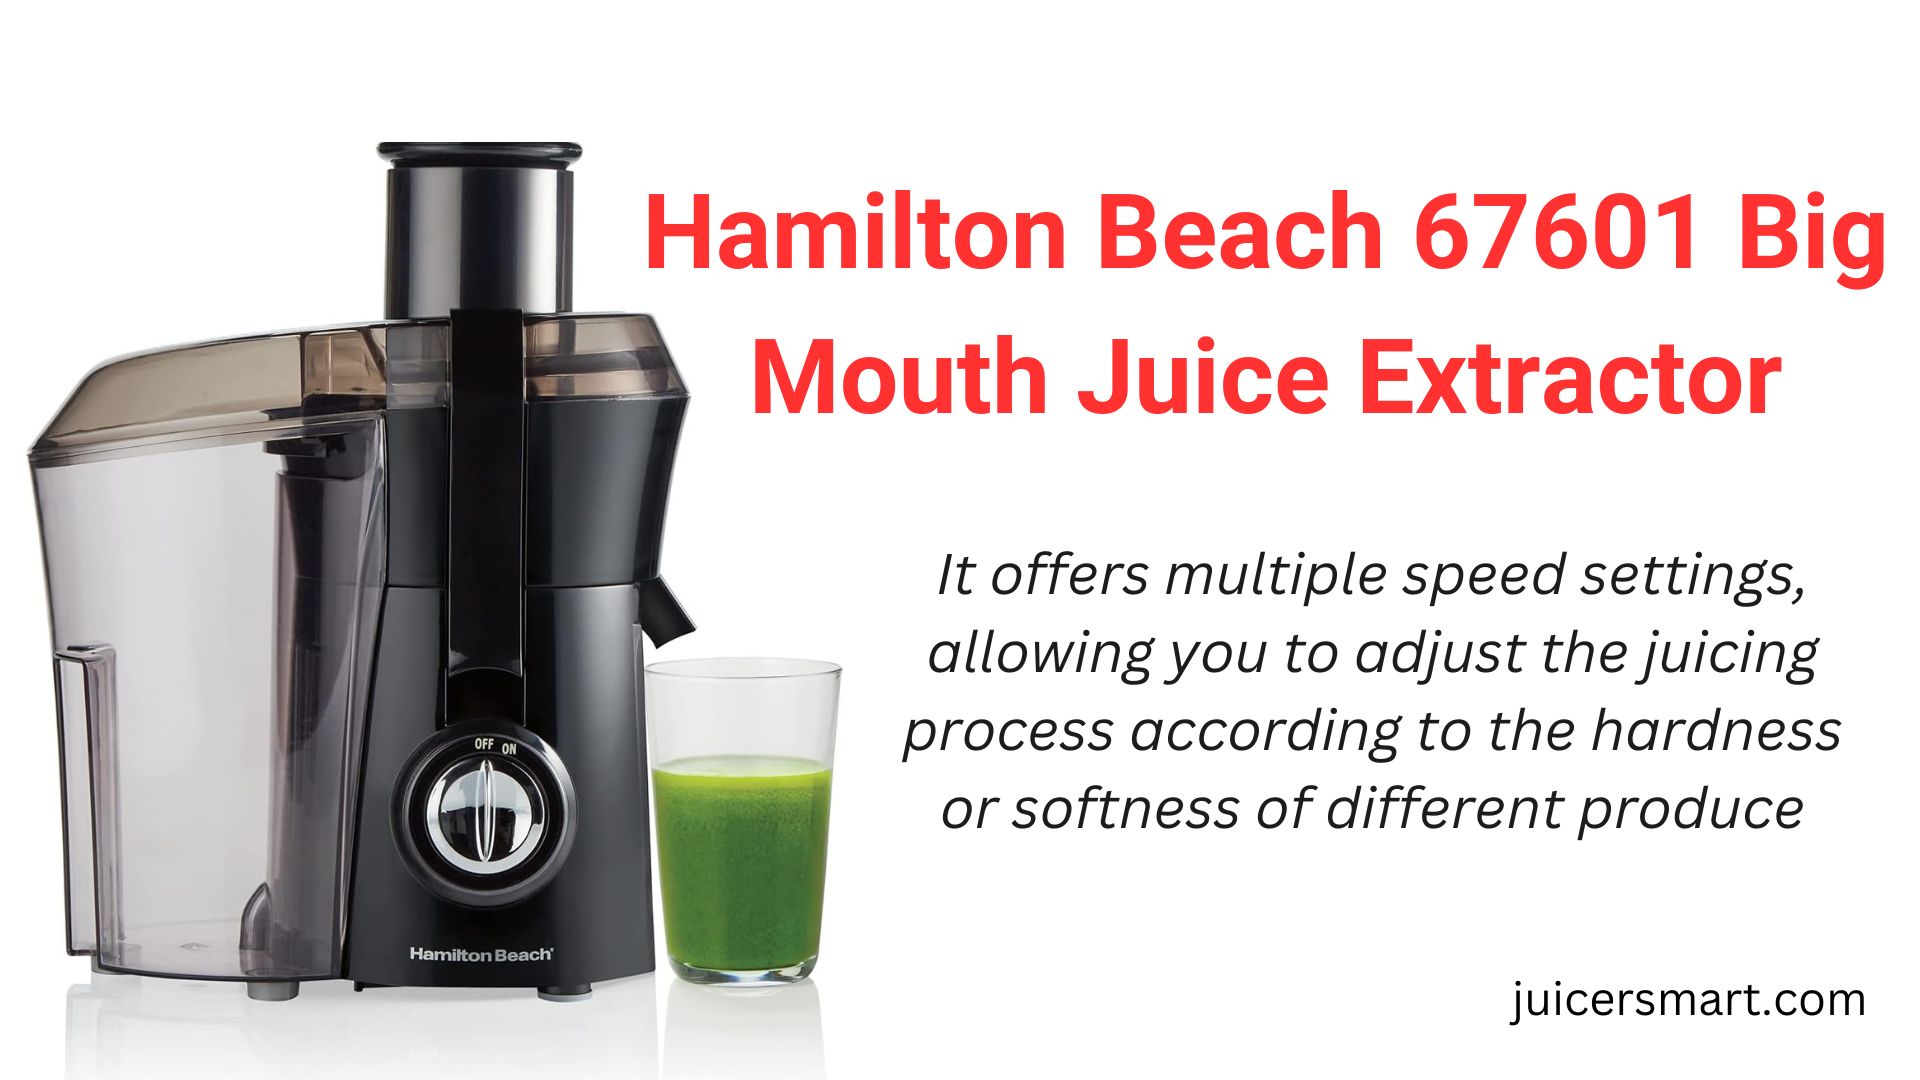 Hamilton Beach 67601 Big Mouth Juice Extractor